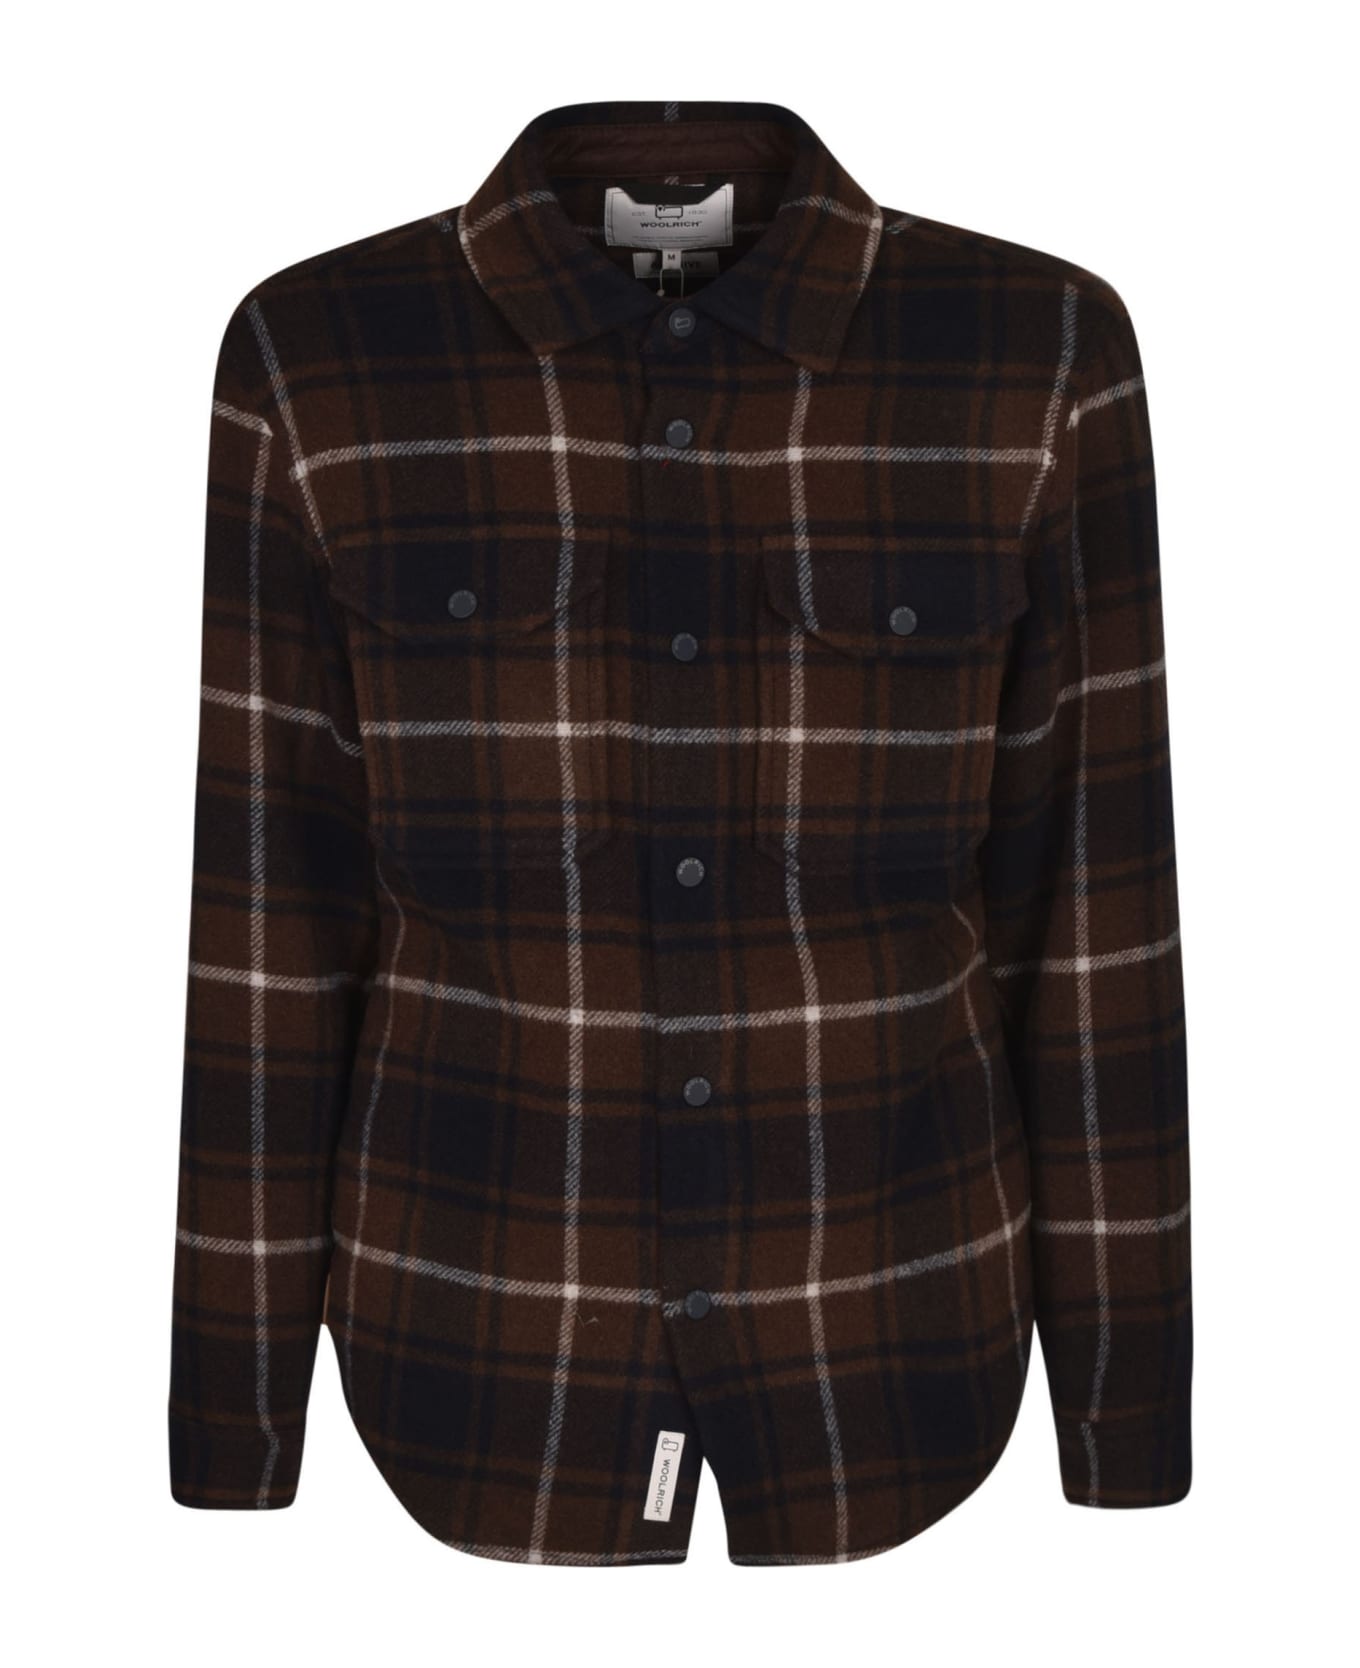 Woolrich Check Buttoned Shirt - Brown